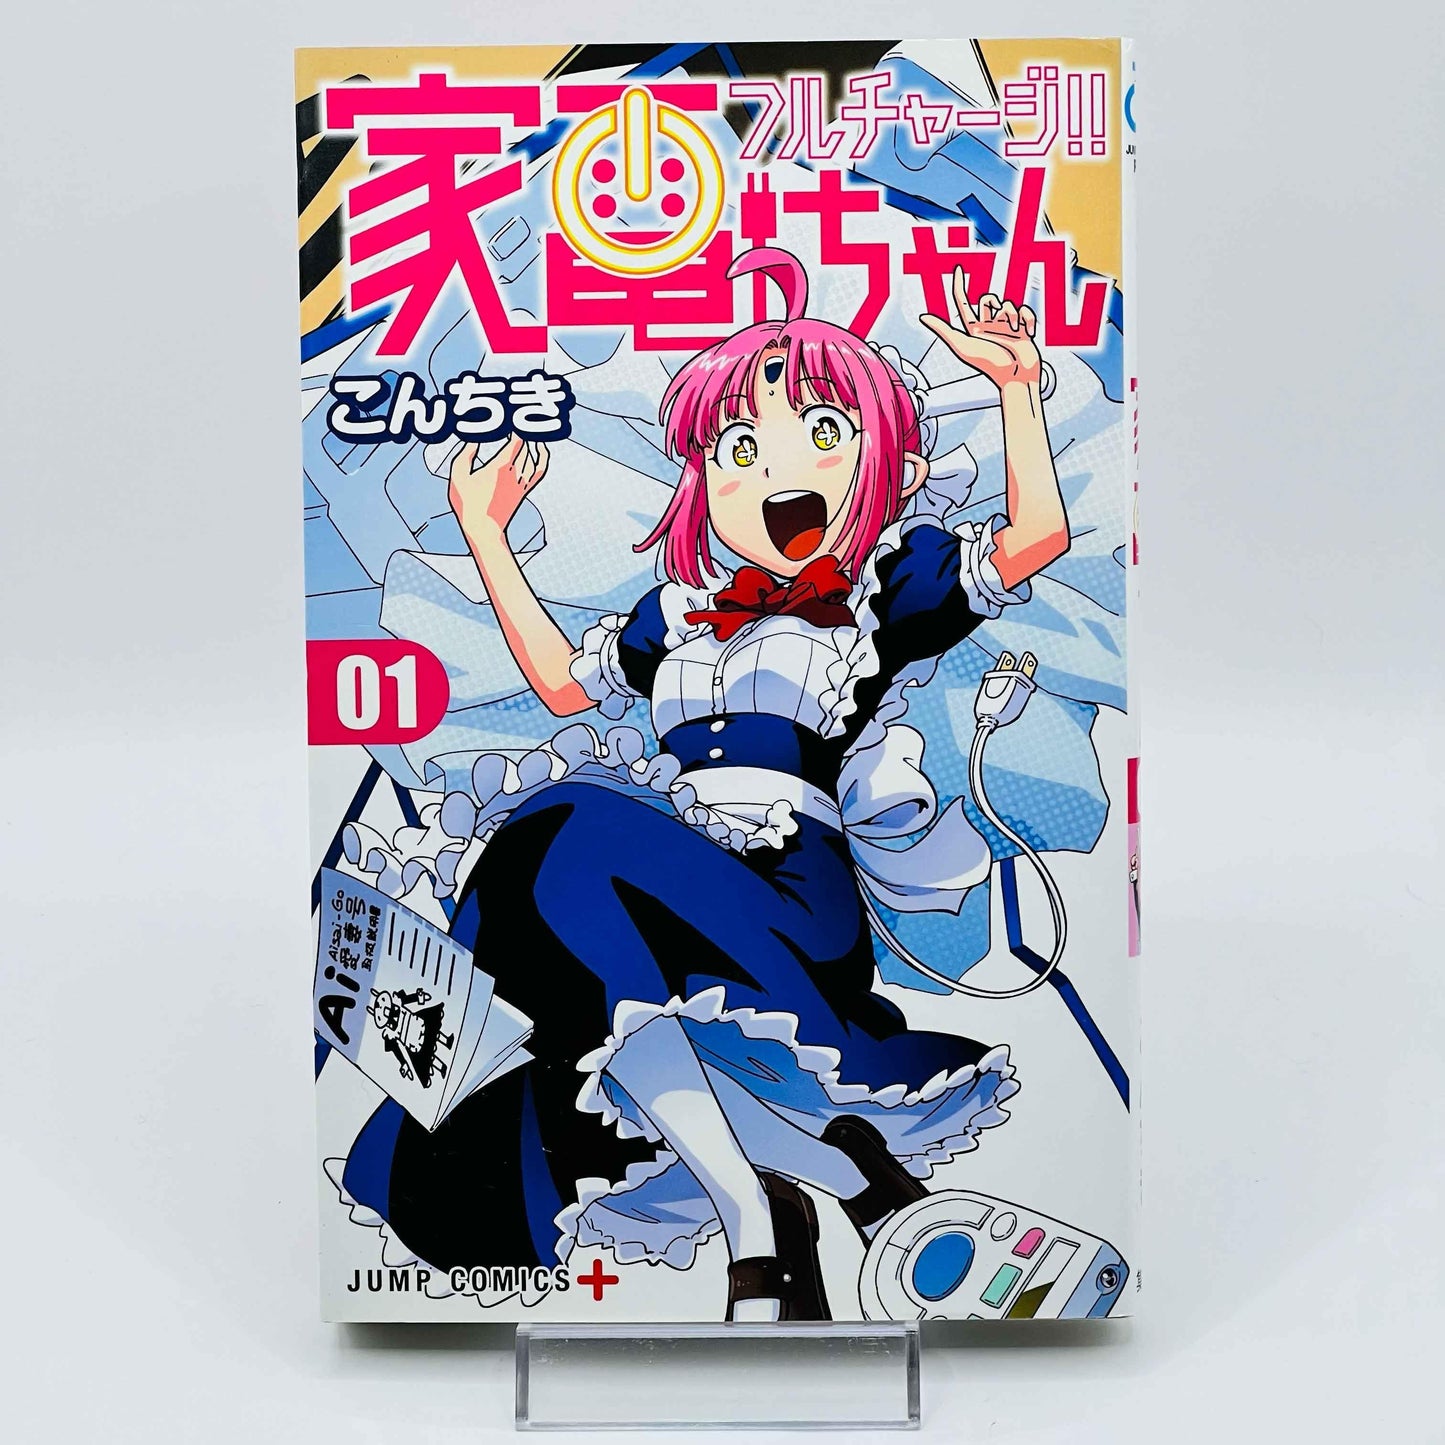 Full Charge Kaden-chan - Volume 01 - 1stPrint.net - 1st First Print Edition Manga Store - M-KADENCHAN-01-001